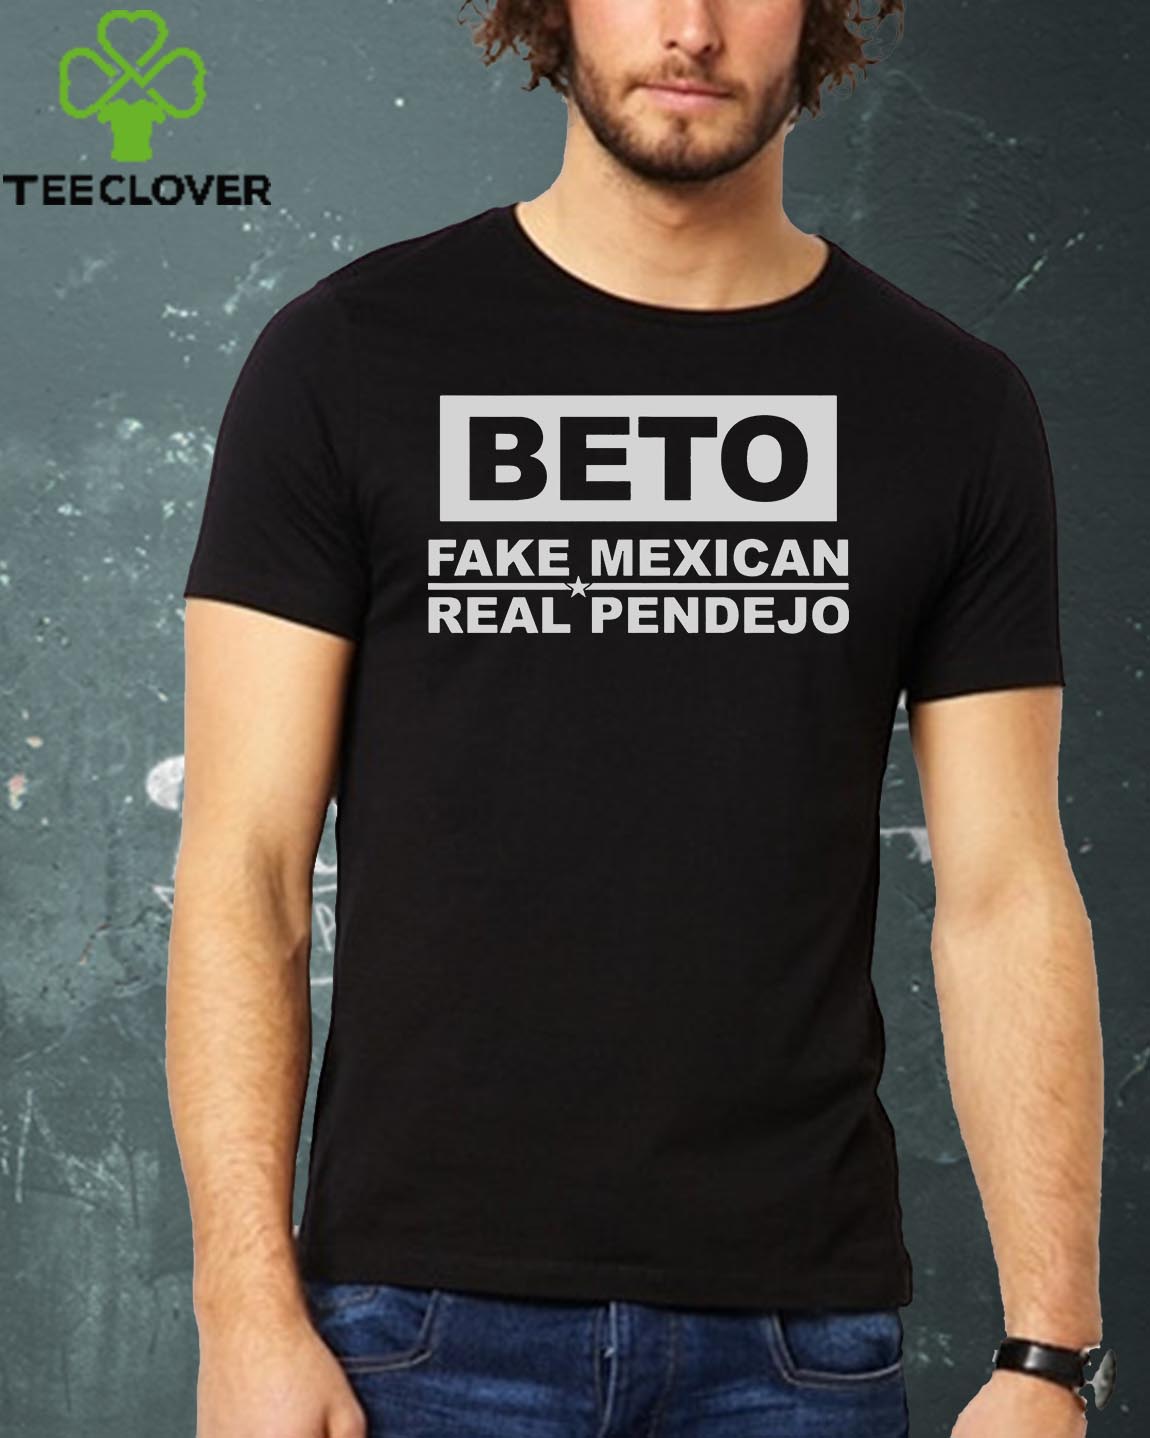 Beto fake Mexican real Pendejo